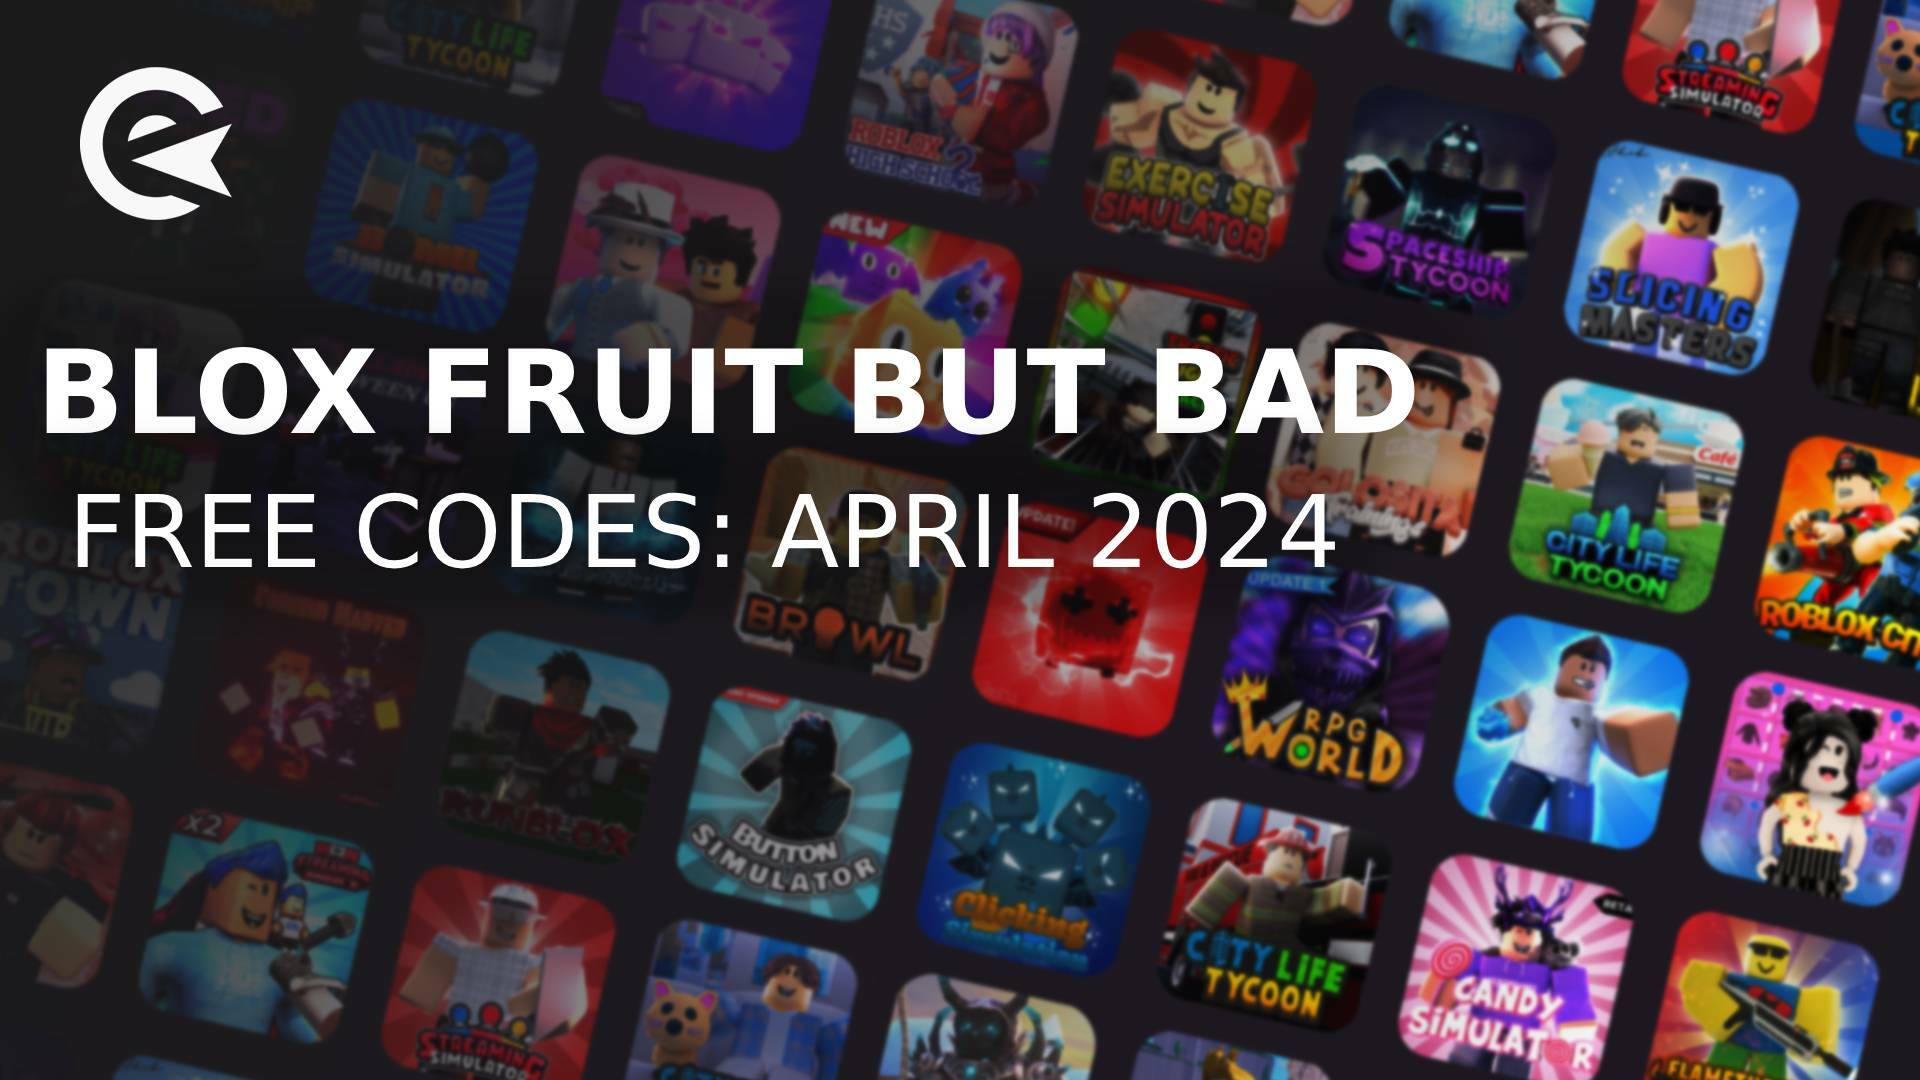 Blox fruit but bad codes april 2024